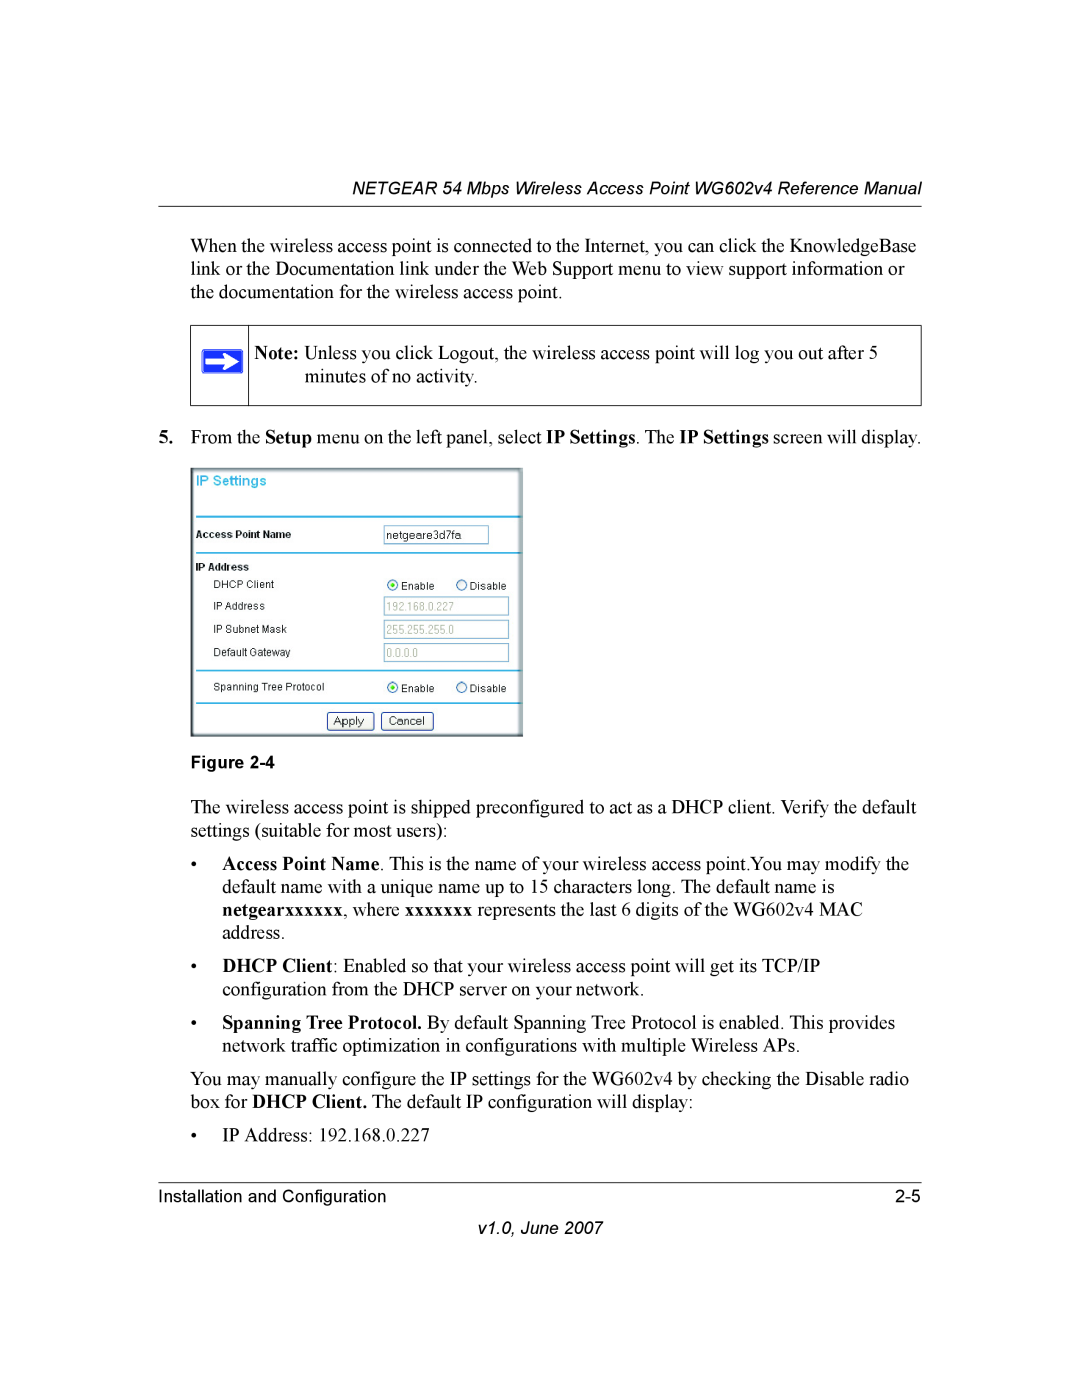 NETGEAR WG602V4 manual IP Address 